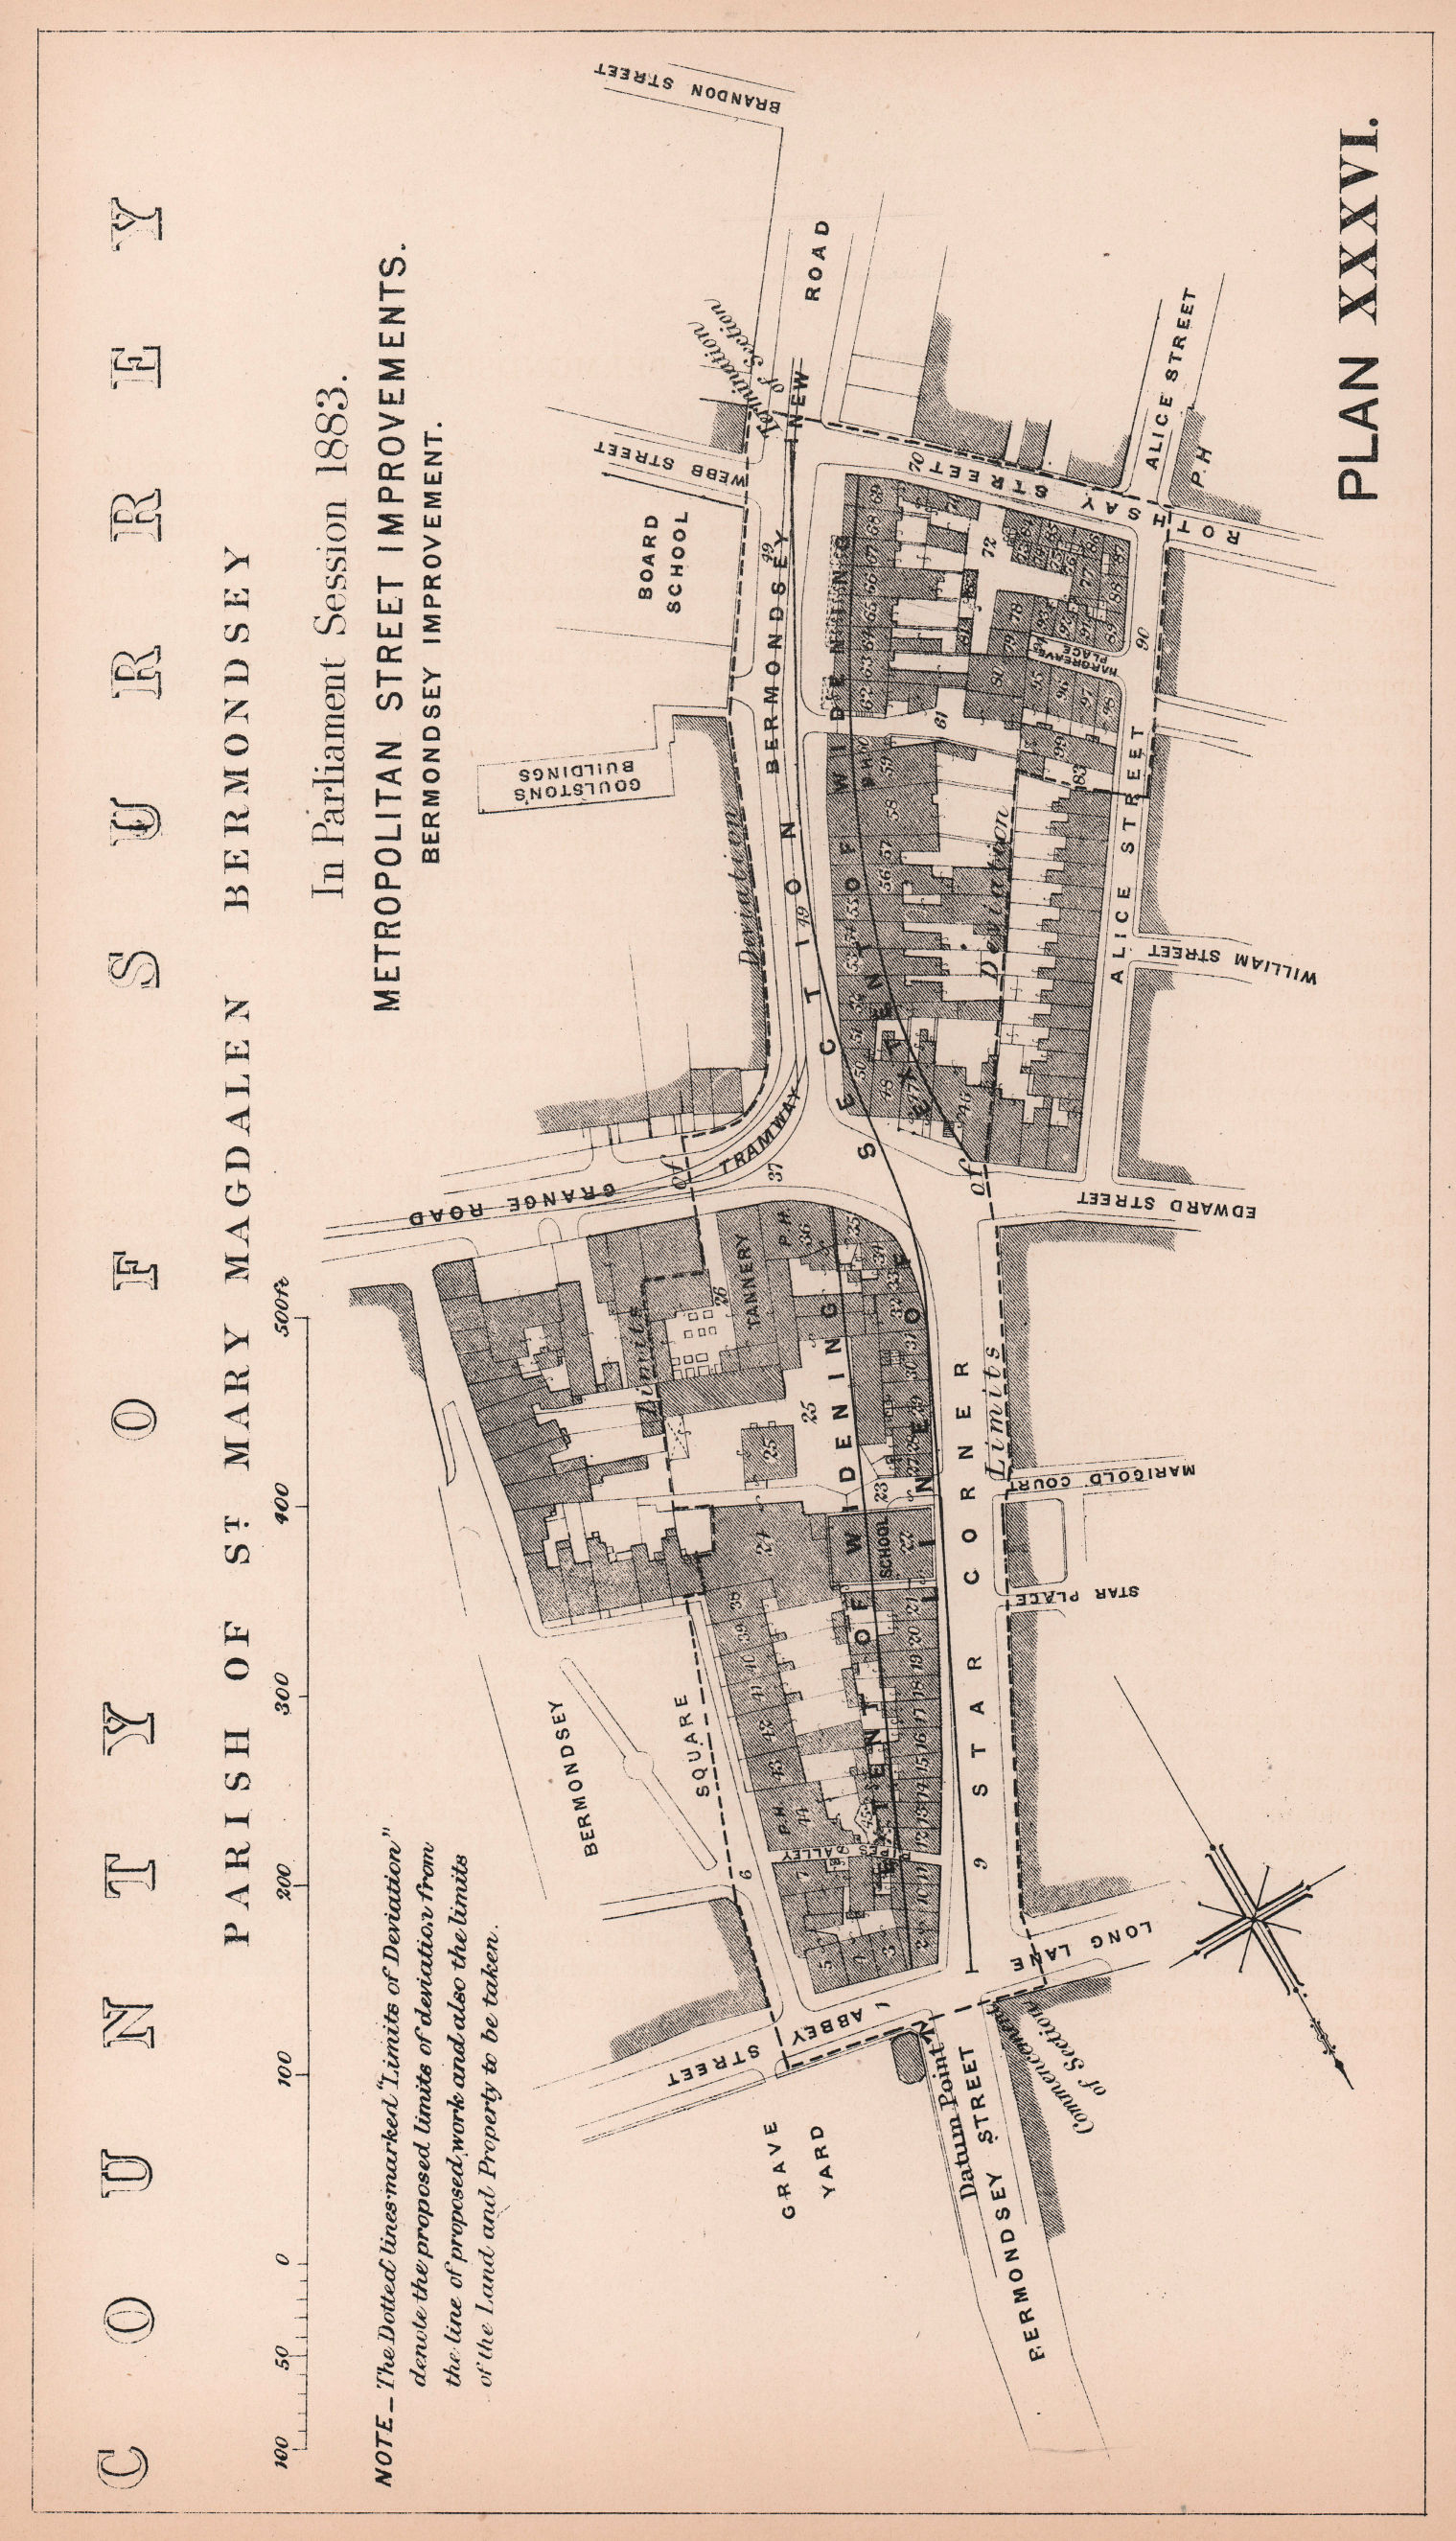 Associate Product 1883 Bermondsey Street. Tower Bridge Road widening. Abbey St-Rothsay St 1898 map